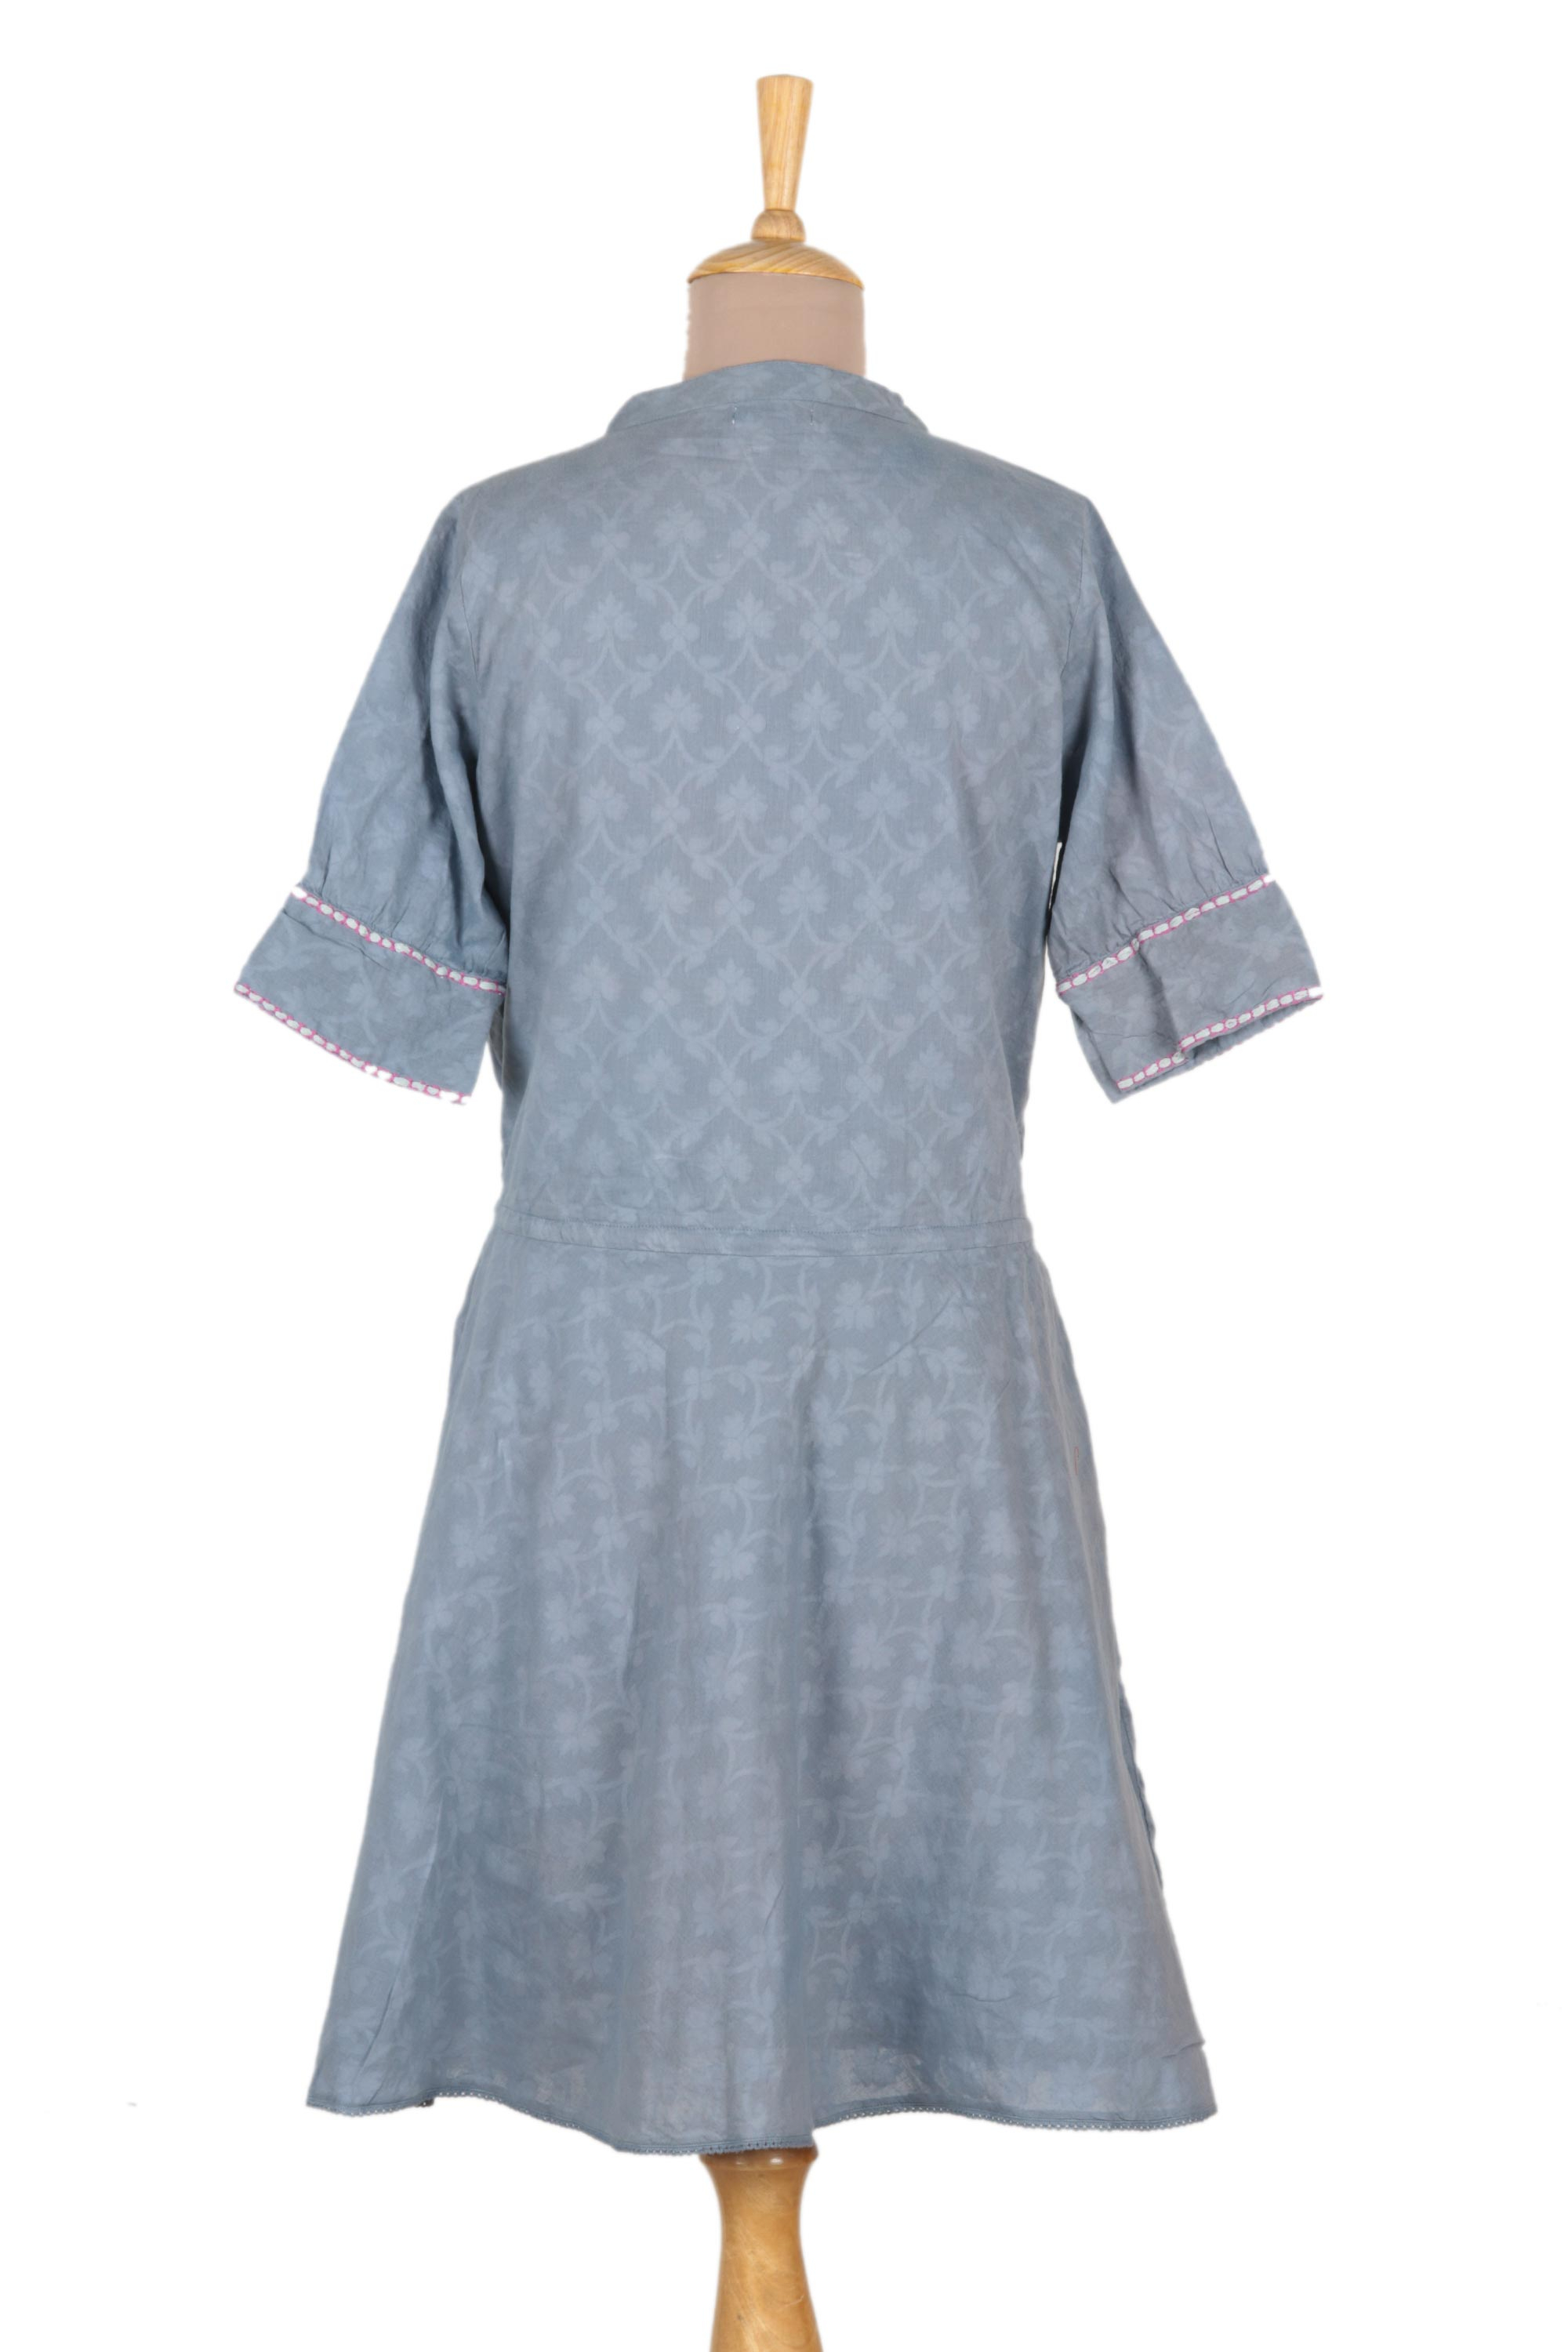 UNICEF Market | Cotton A-Line Summer Dress in Wedgwood Blue - Delhi ...